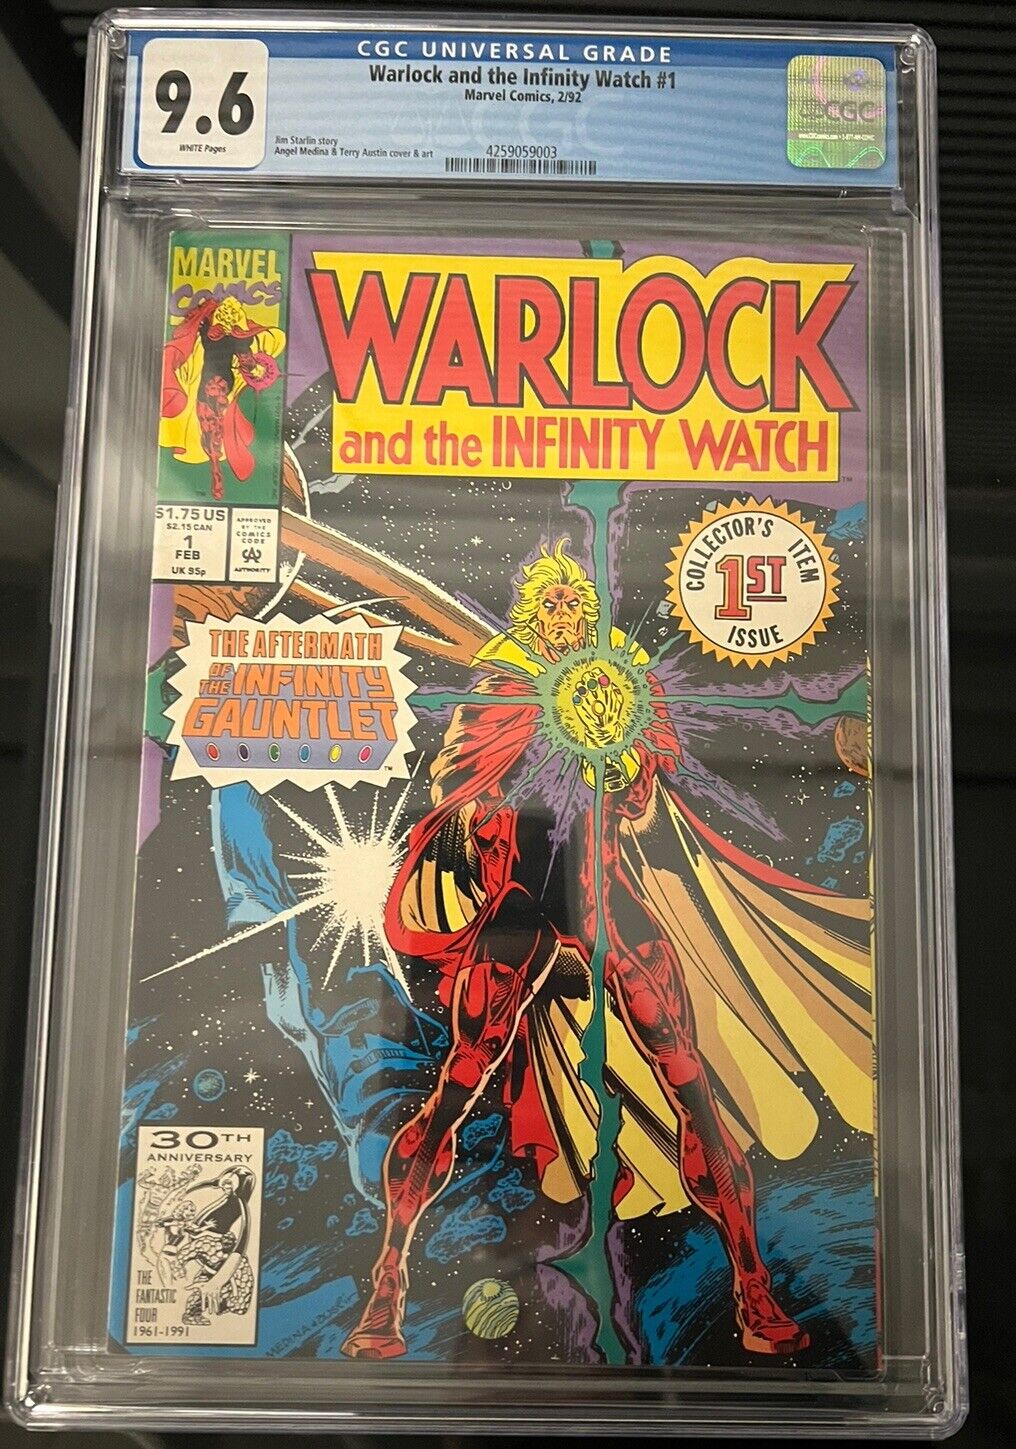 Warlock and the Infinity Watch #1 CGC 9.6 1992 4259059003